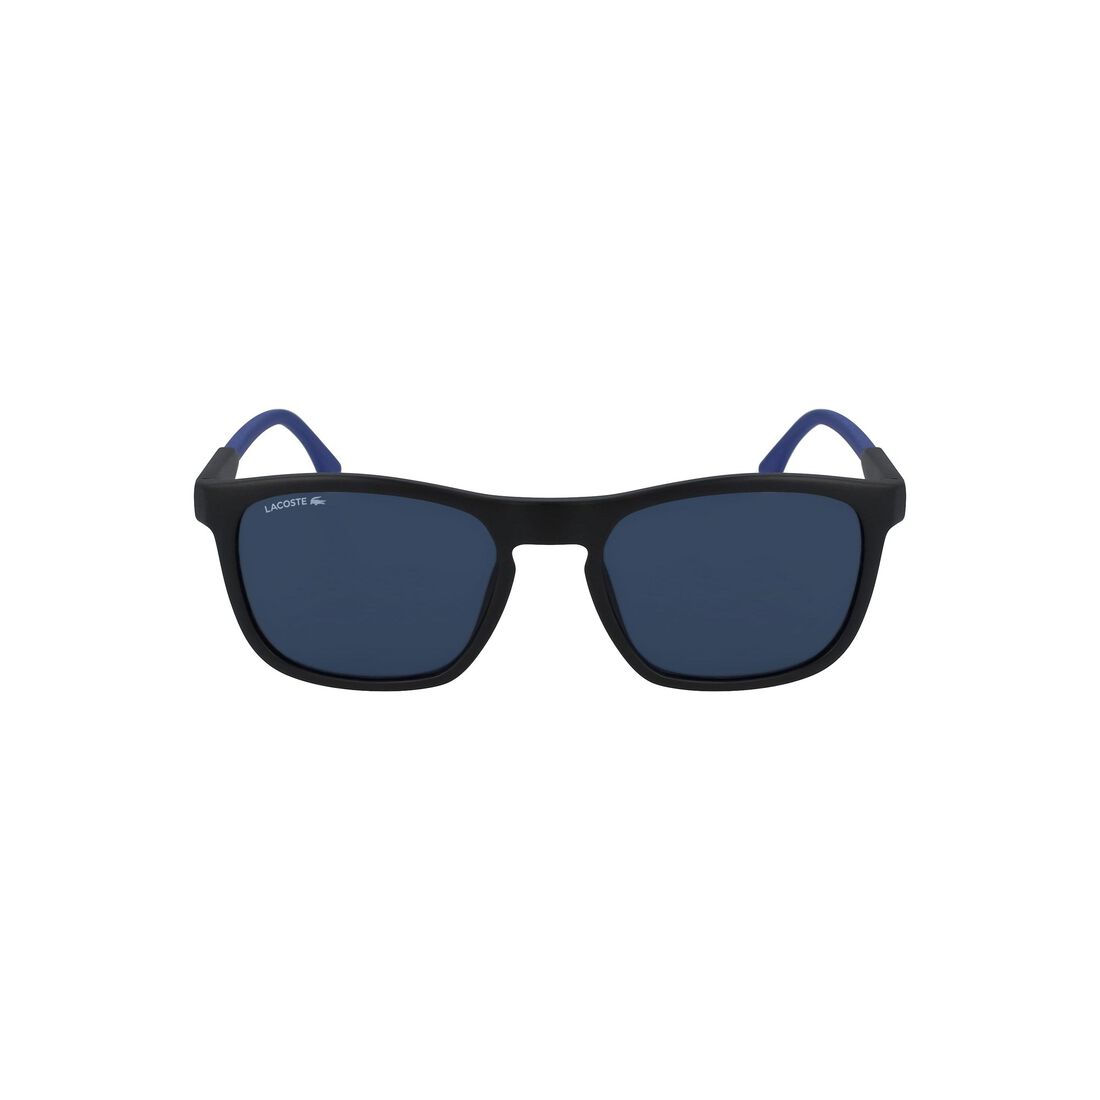 Men's Rectangle Fan Sunglasses